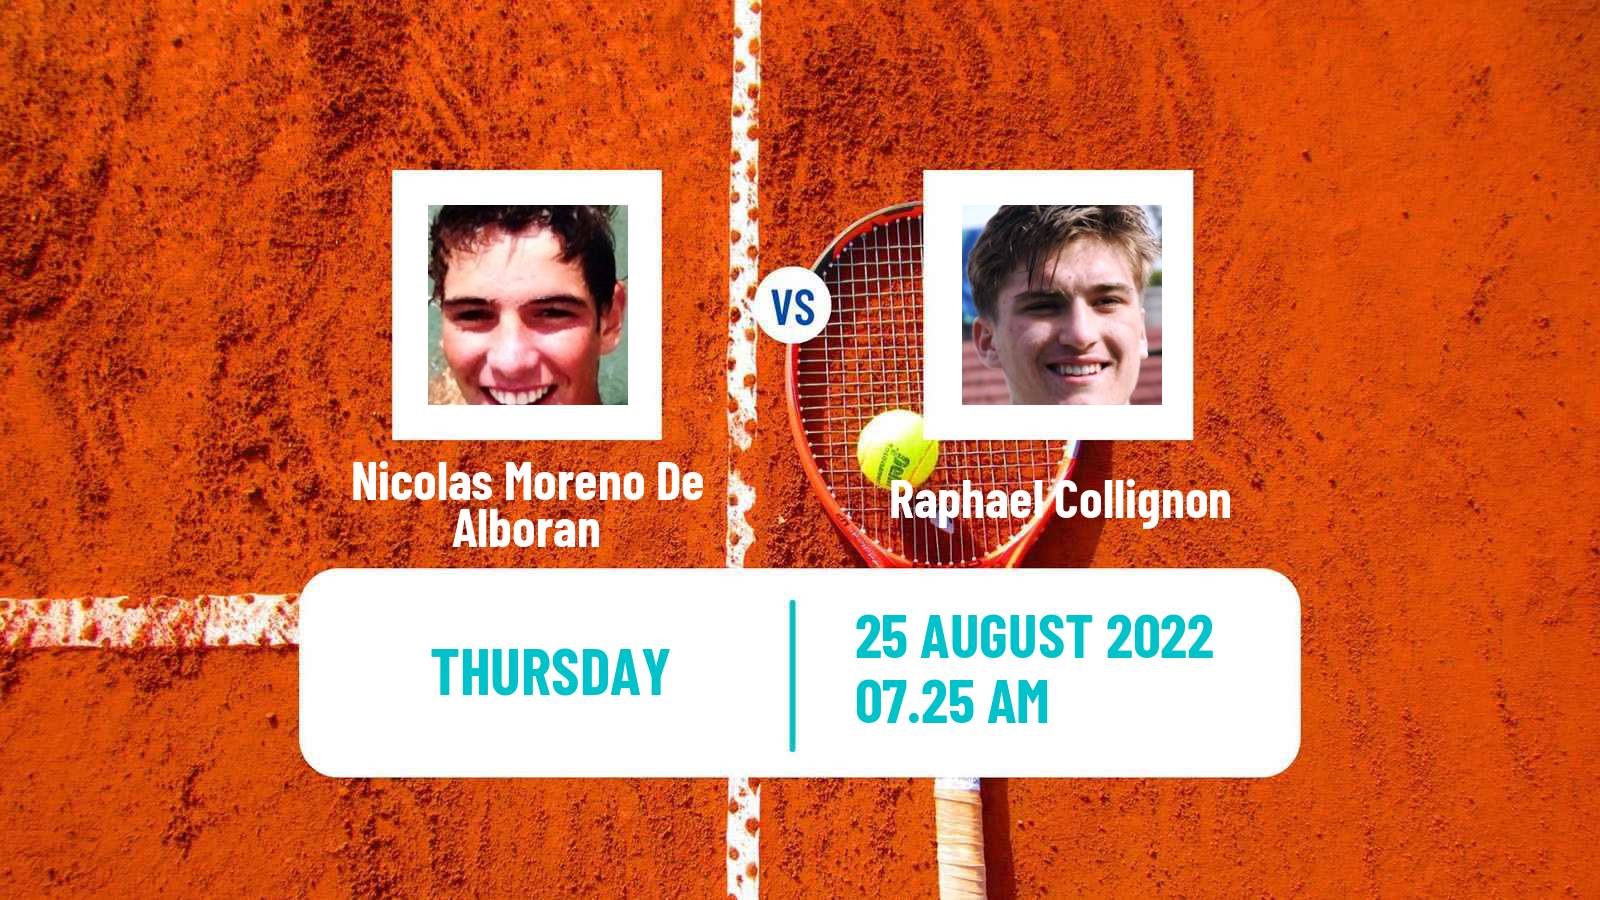 Tennis ATP Challenger Nicolas Moreno De Alboran - Raphael Collignon